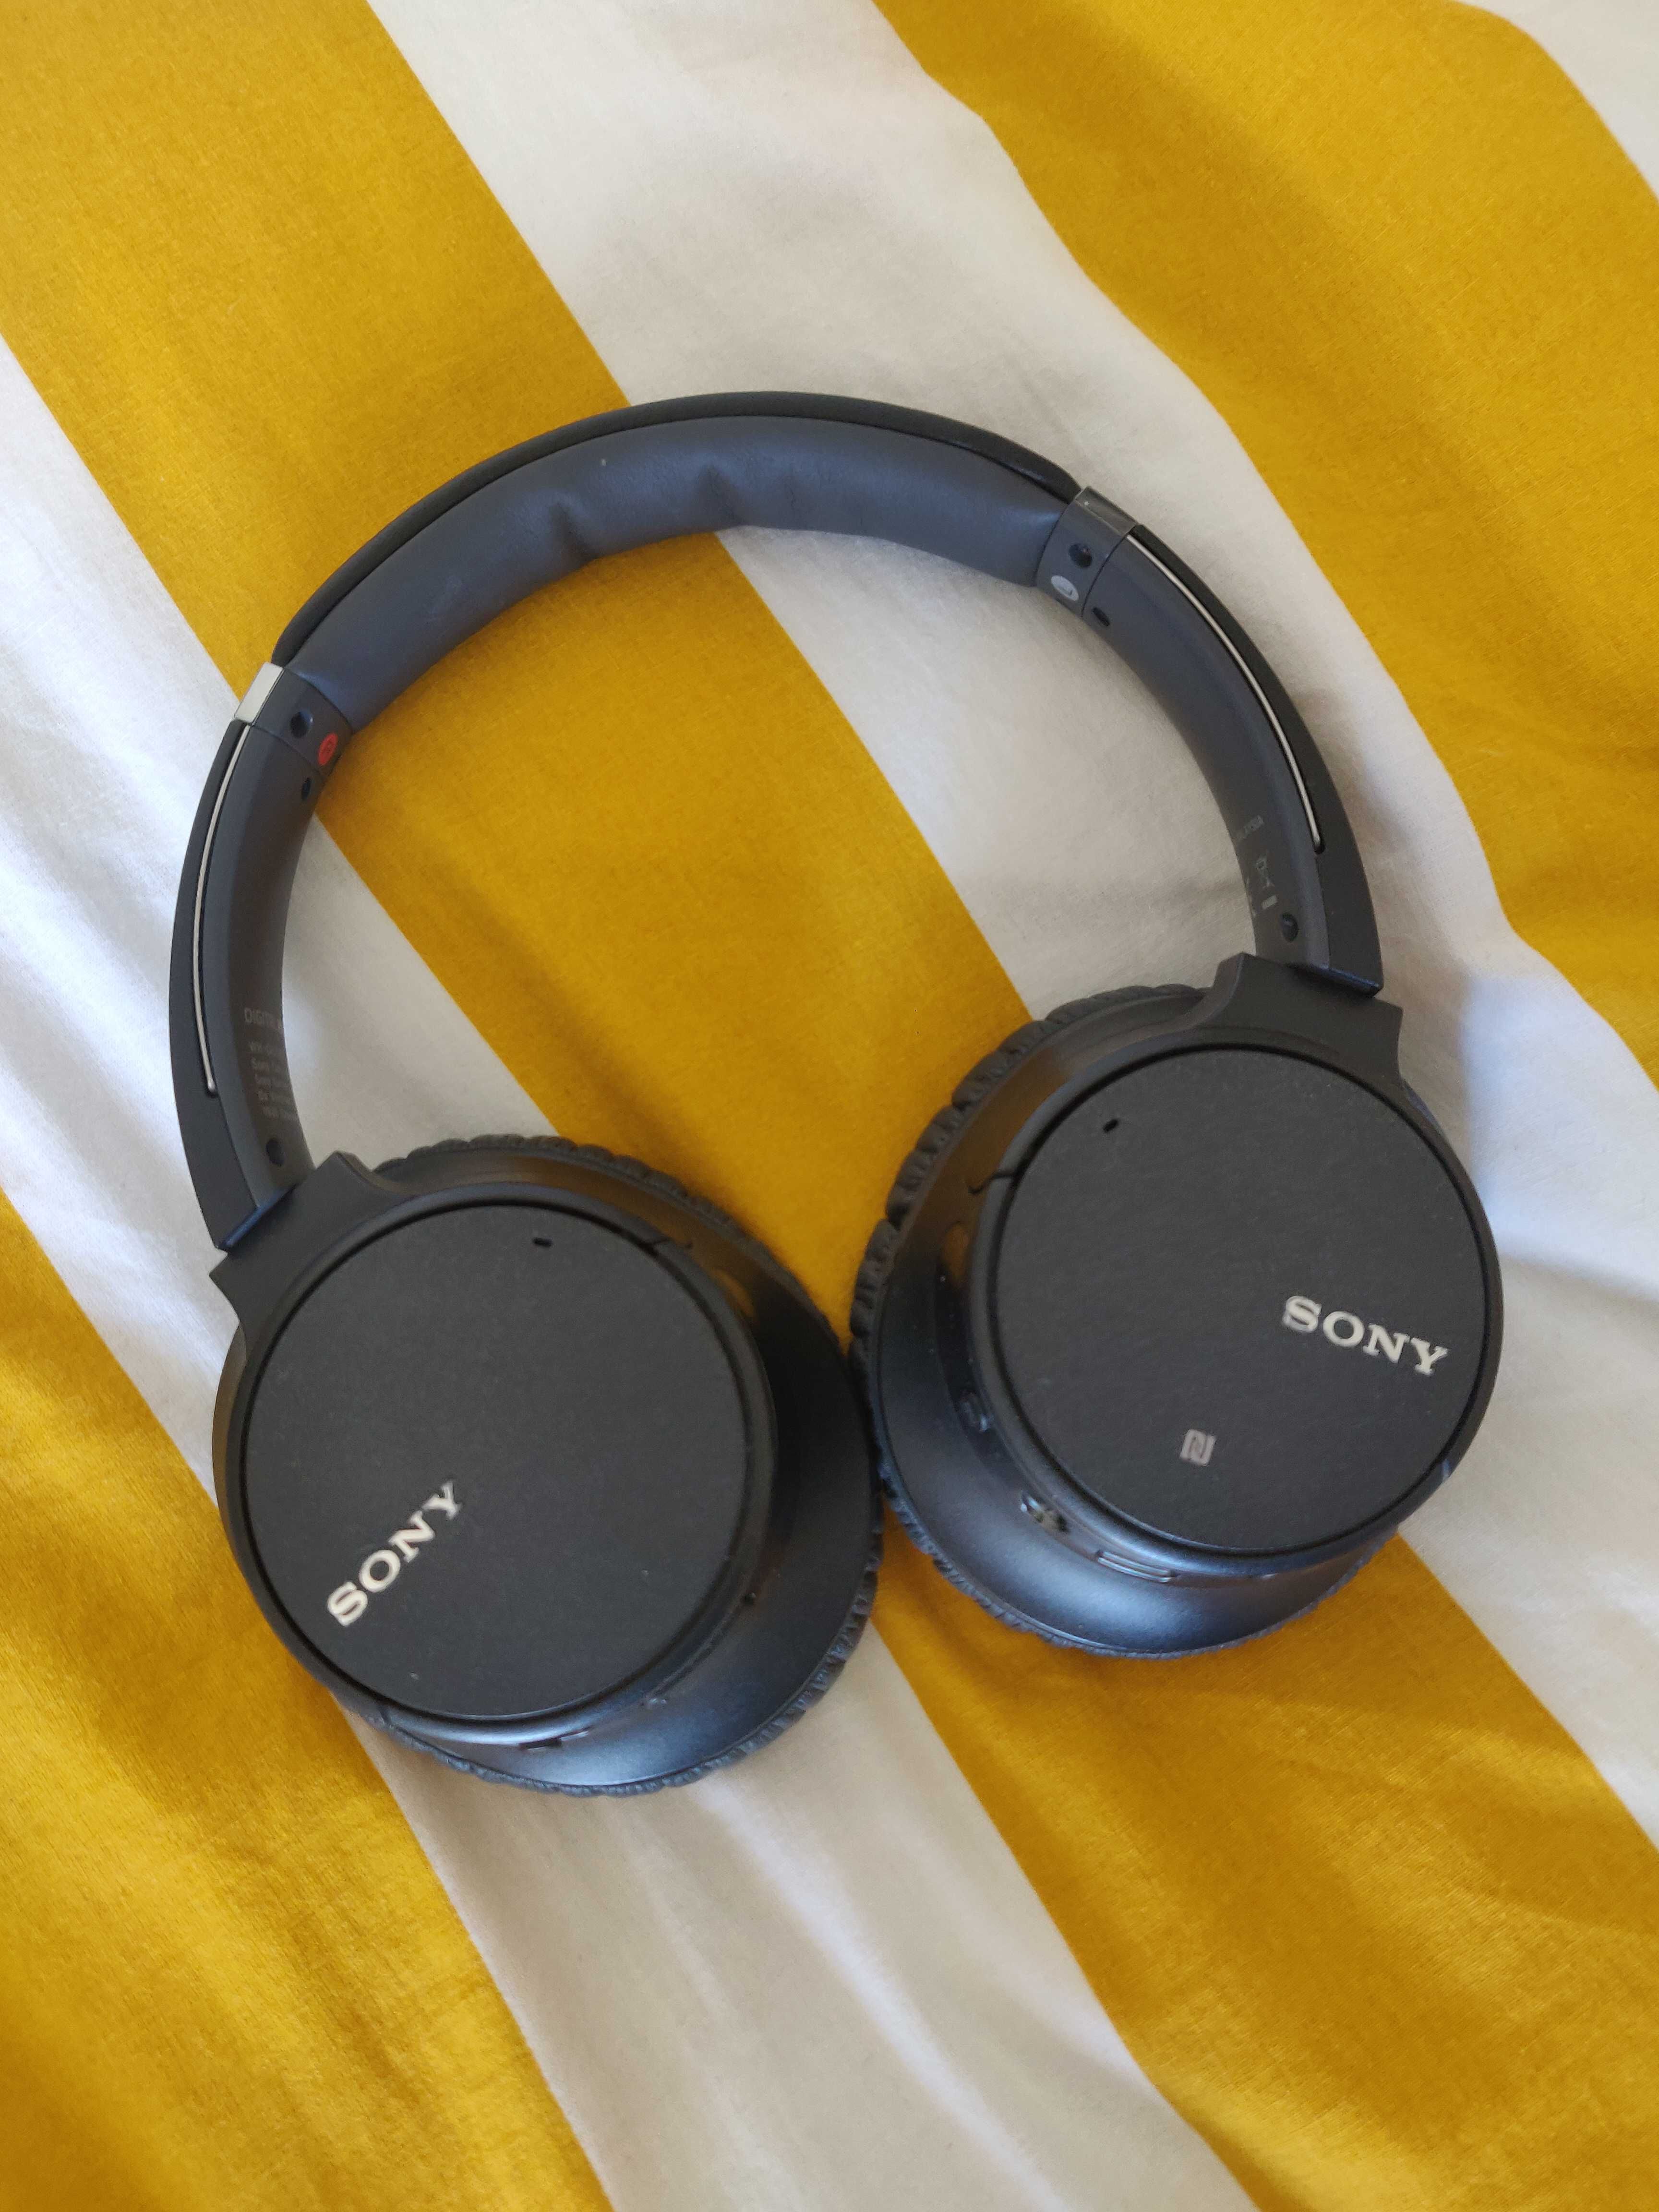 Headphones Sony WH-CH700N